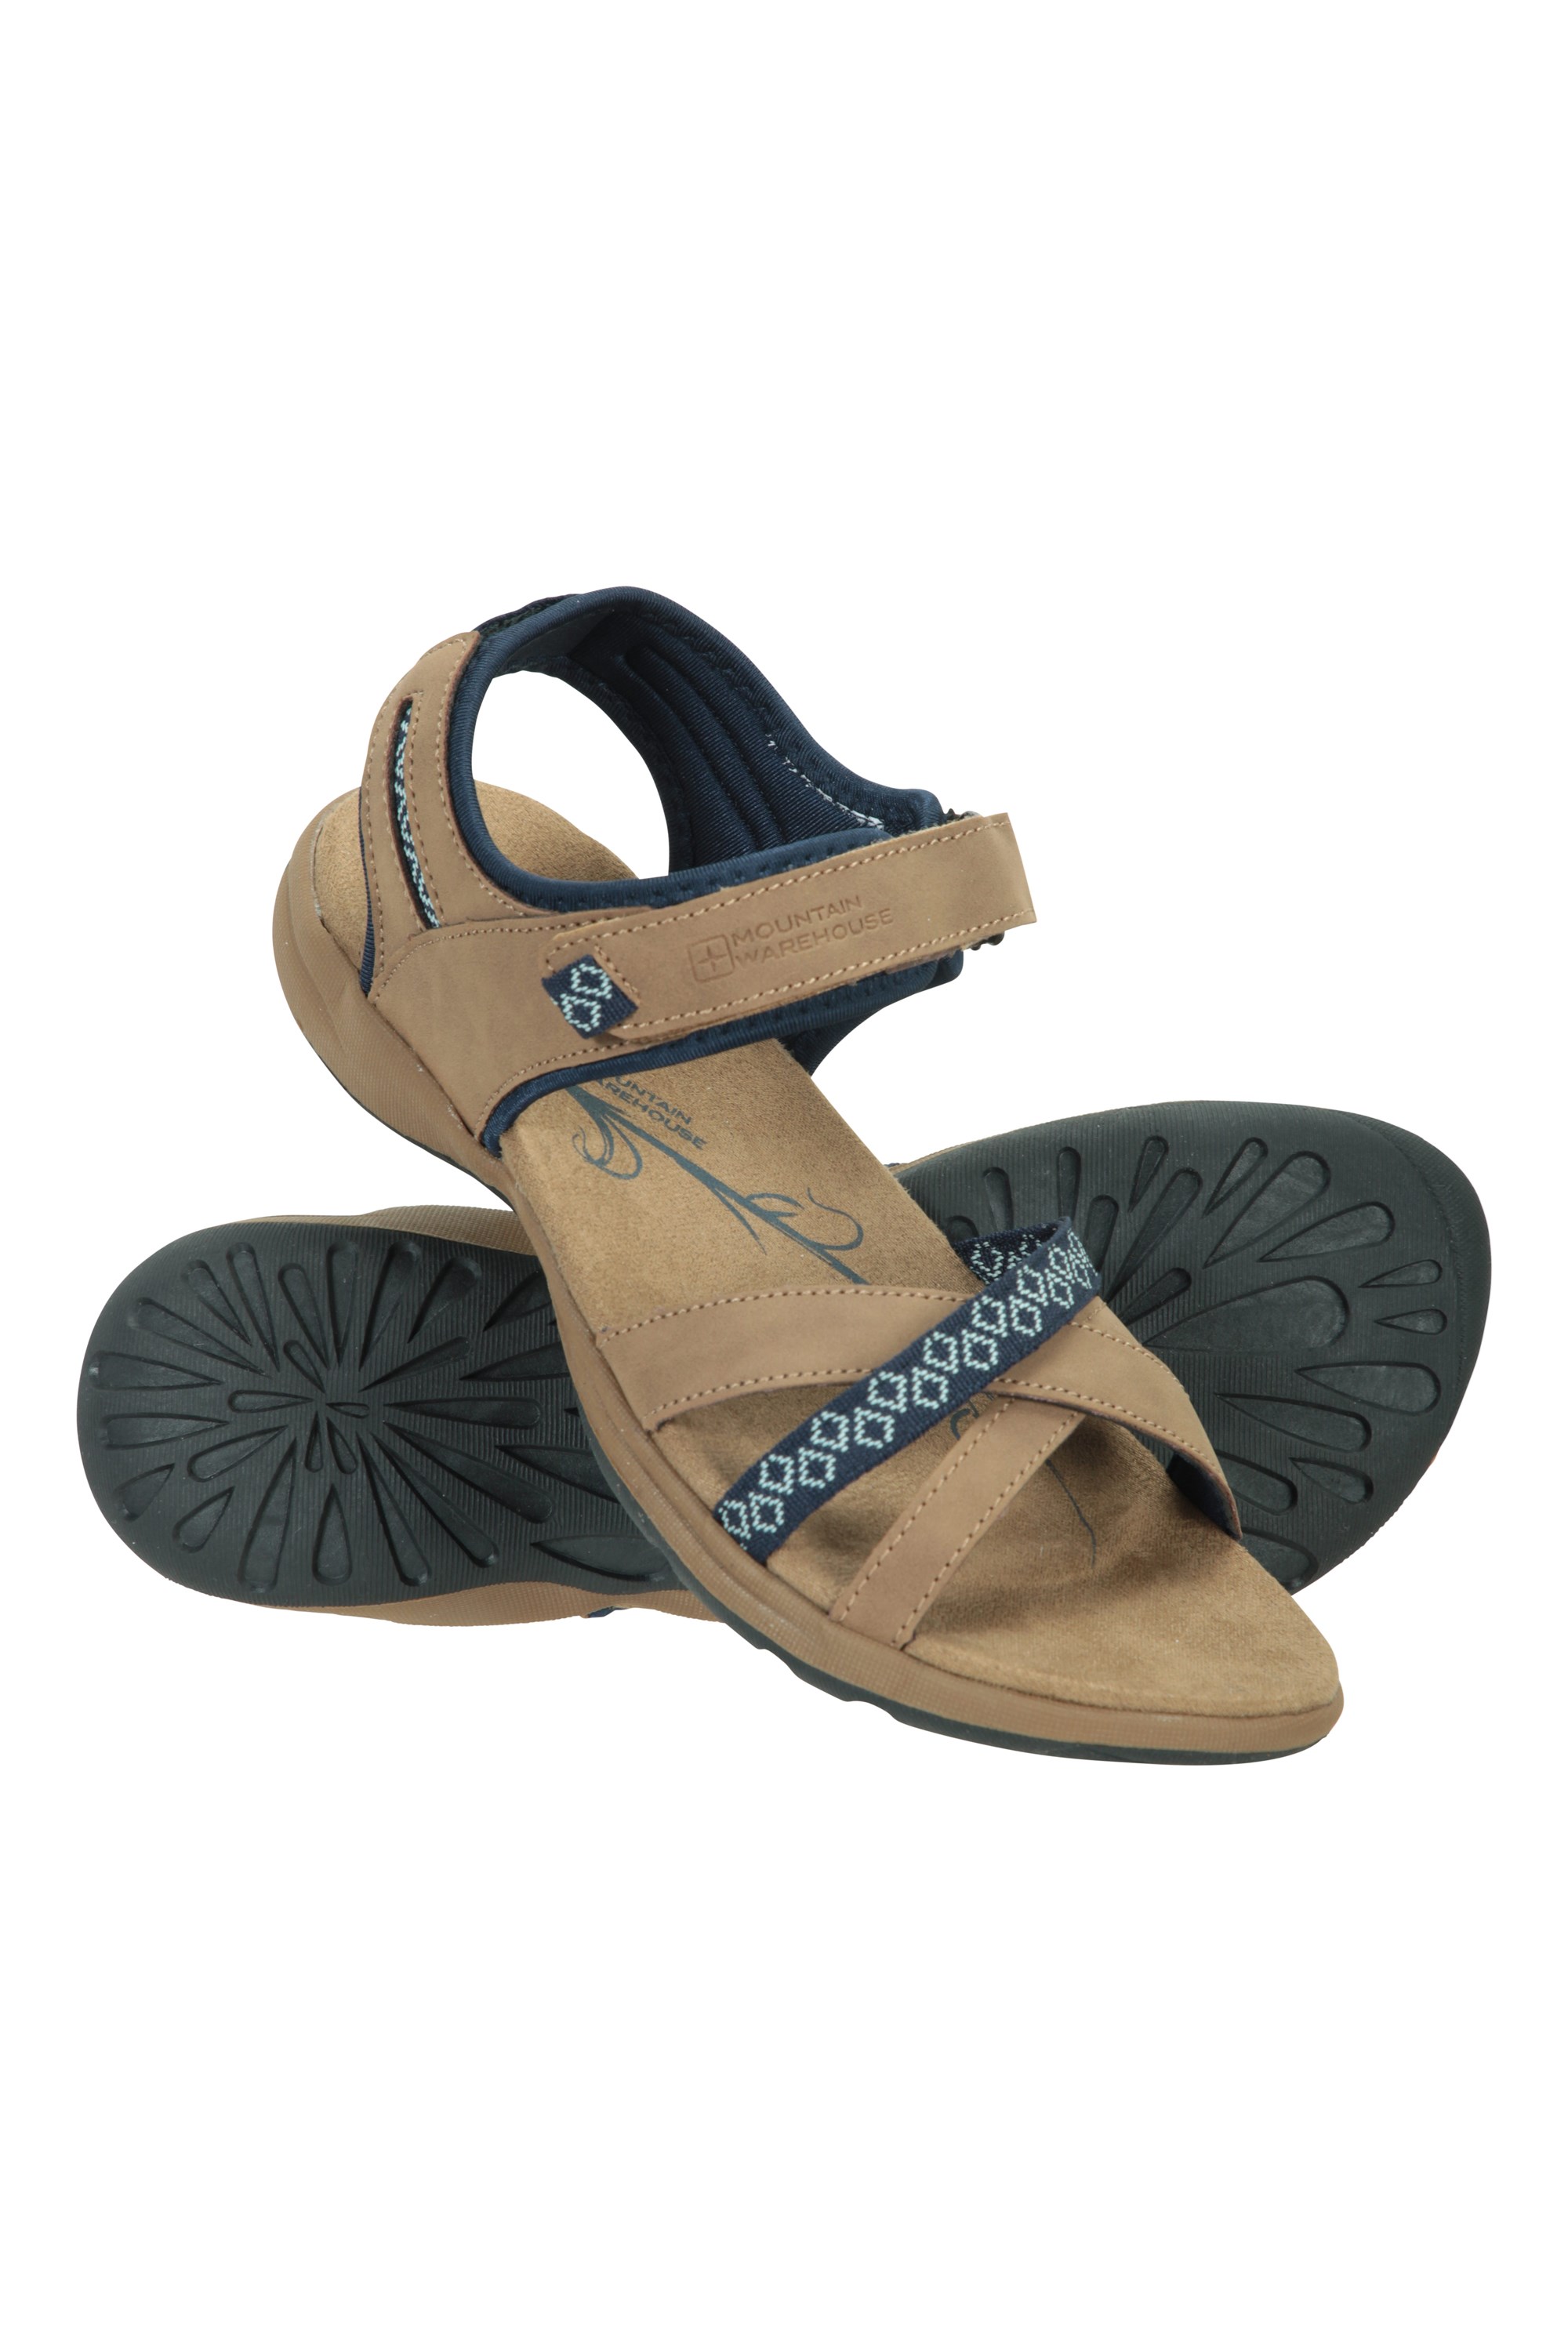 Sandales pour femmes Summertime - Bleu Marine